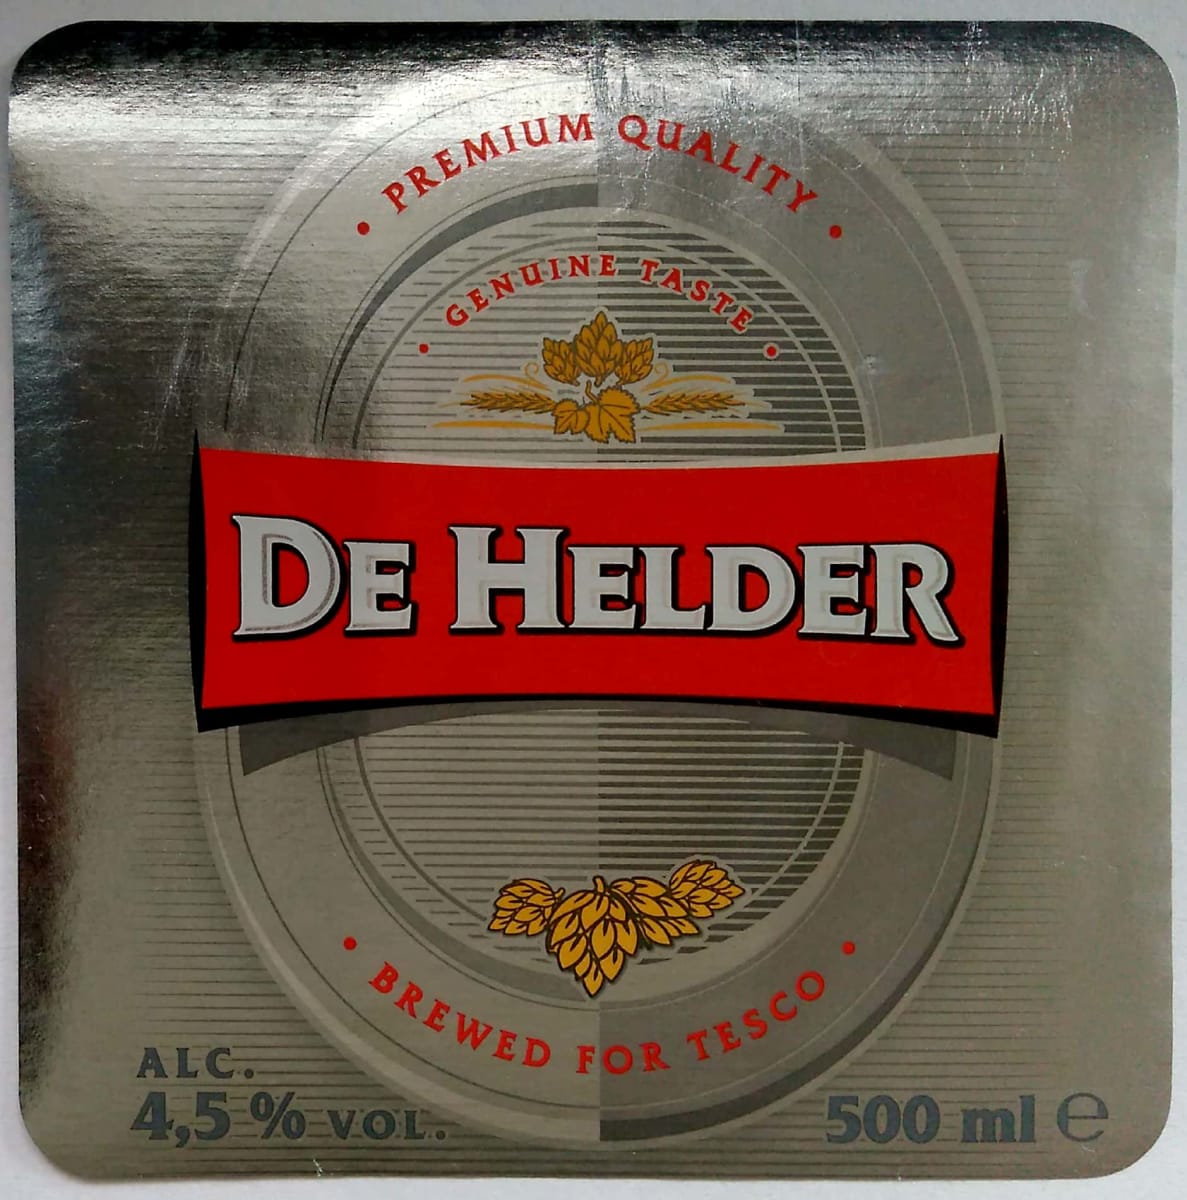 De Helder Premium brewed for Tesco výčepní světlé